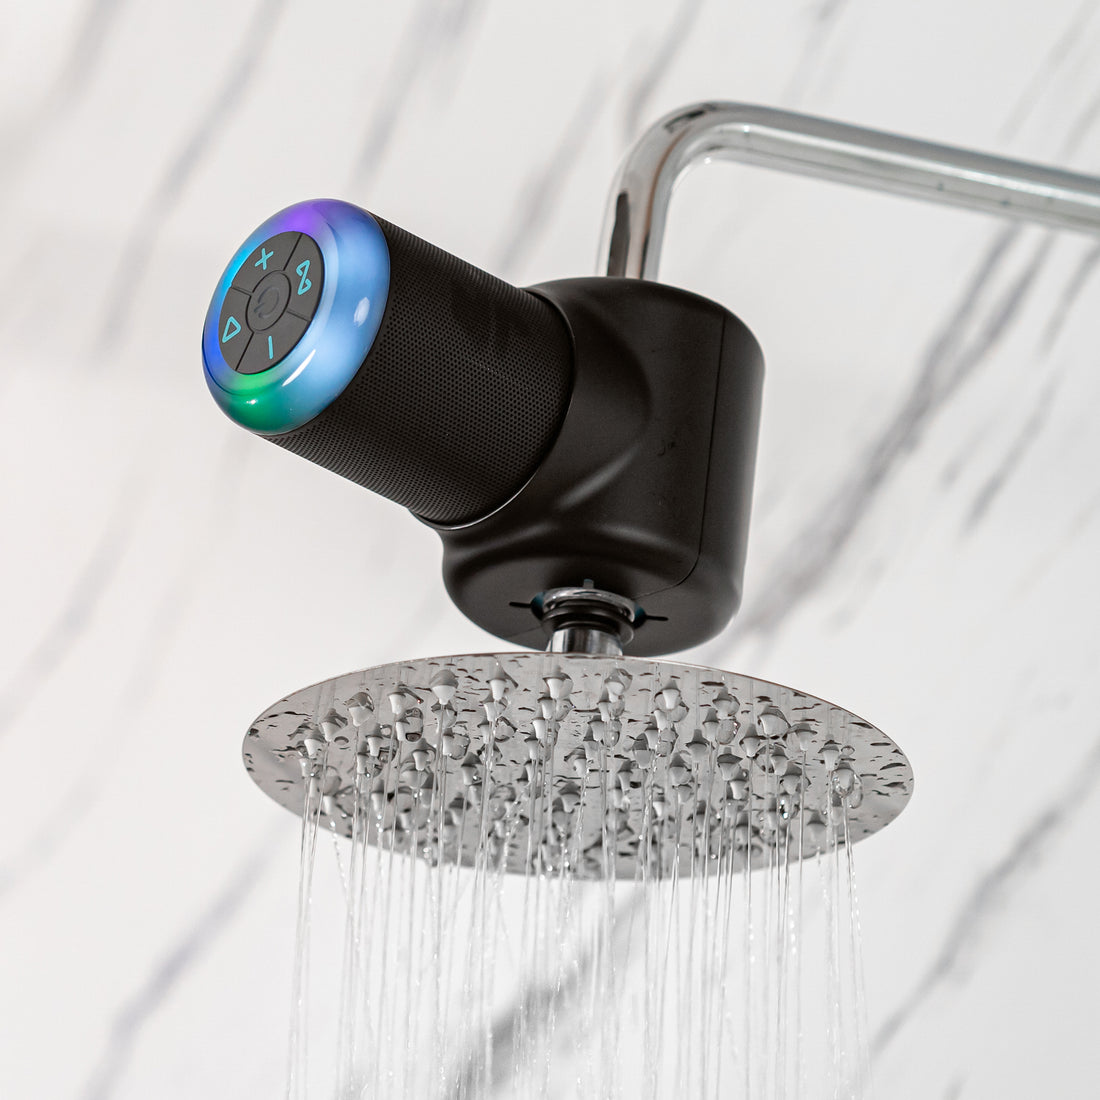 This Amazing Eco-Friendly Shower Speaker Runs On Hydropower